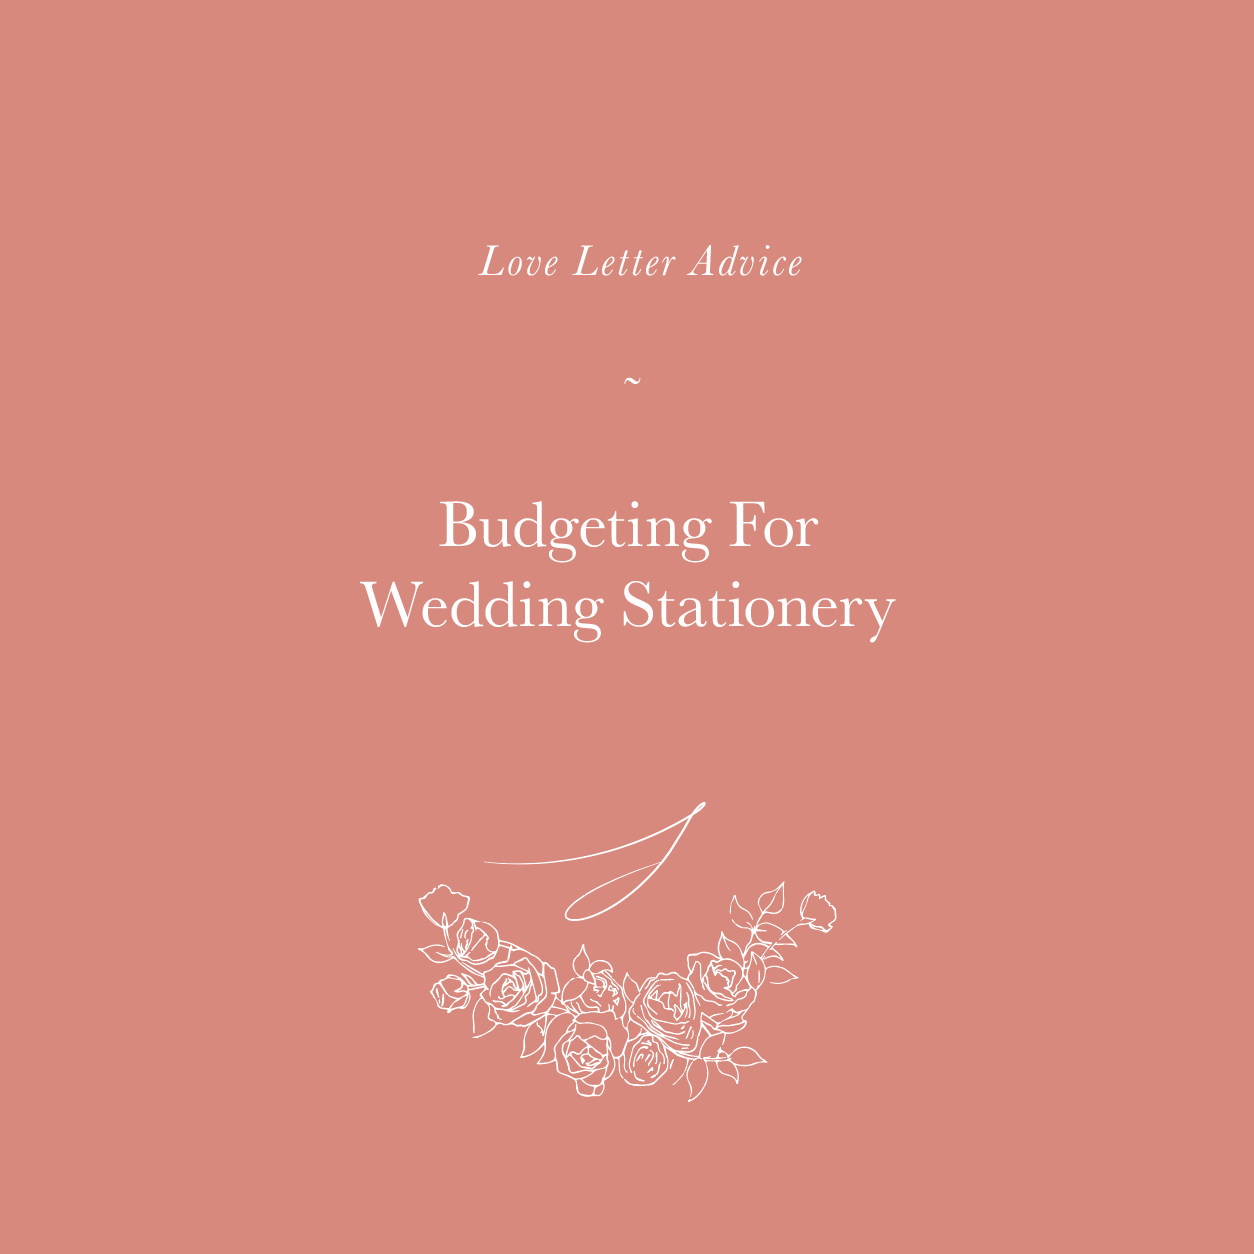 Budgeting For Wedding Stationery